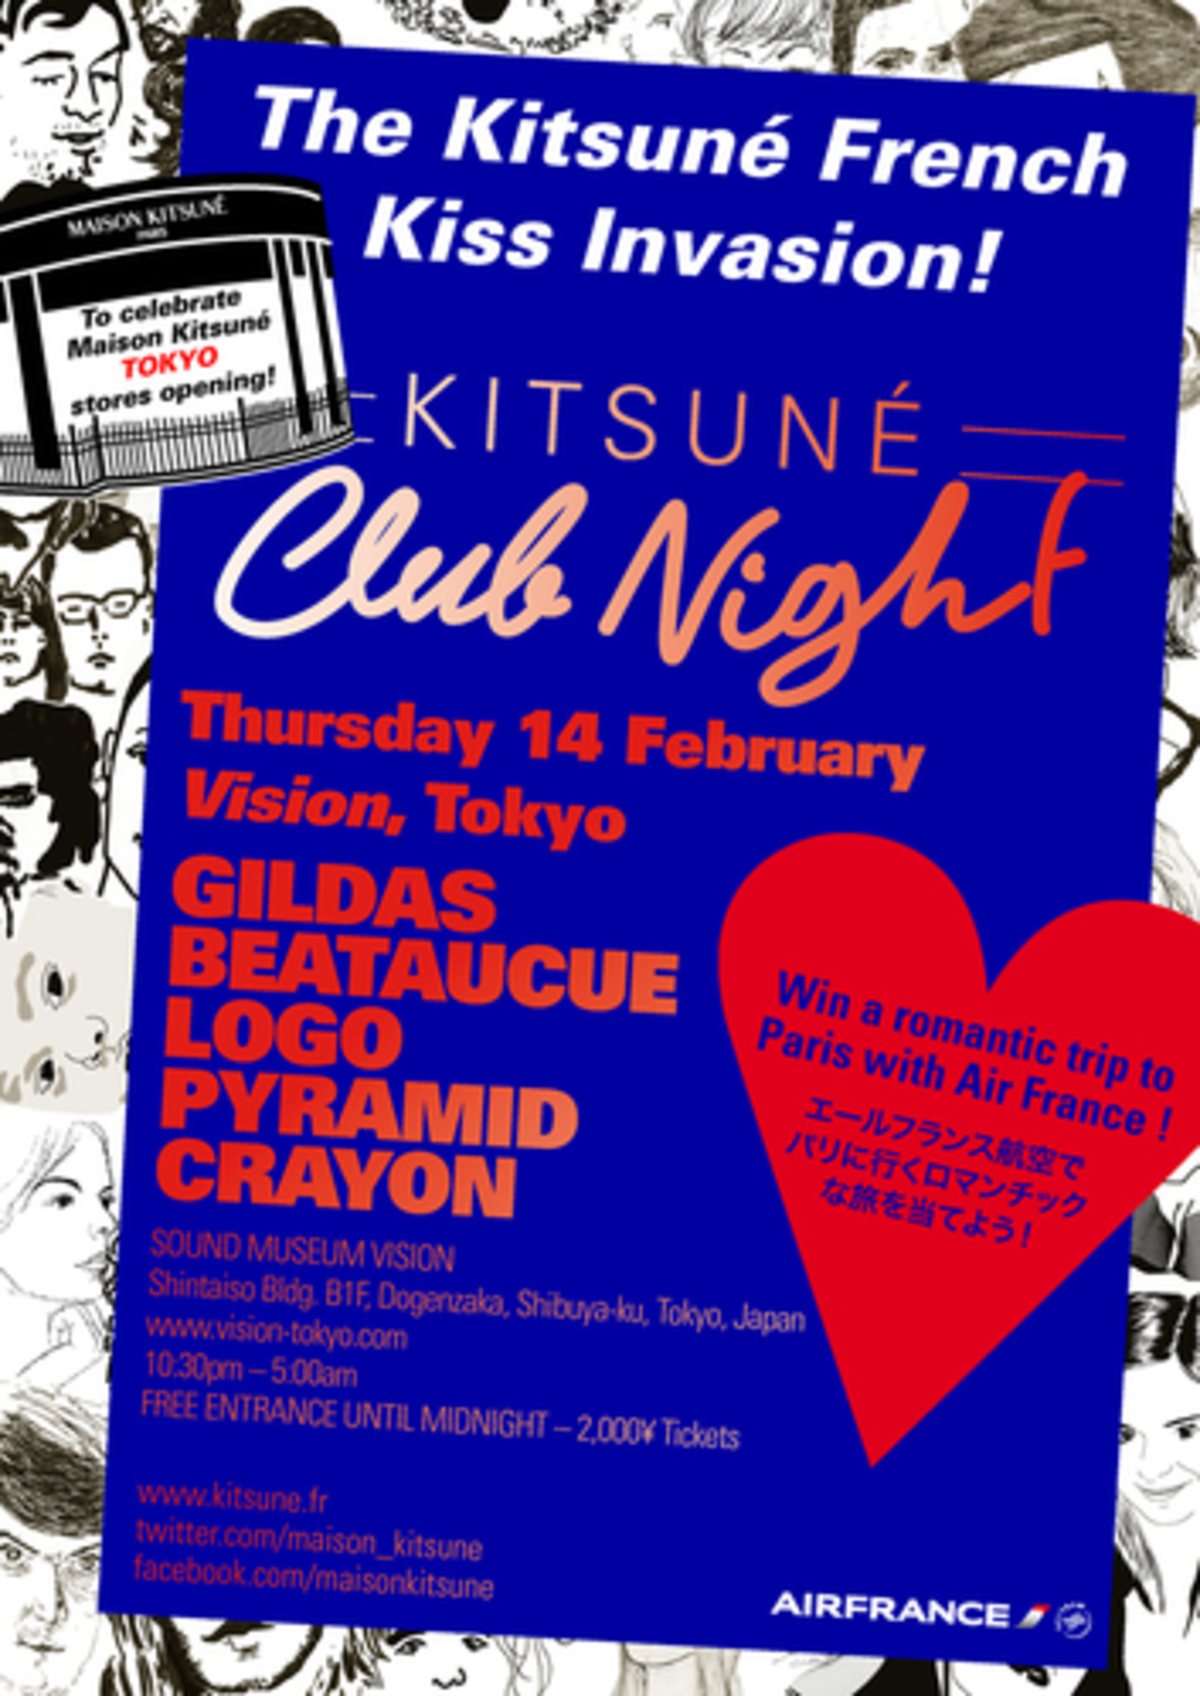 Maison Kitsune 日本初の直営店のオープンを祝し2月14日に Kitsune Club Night を開催